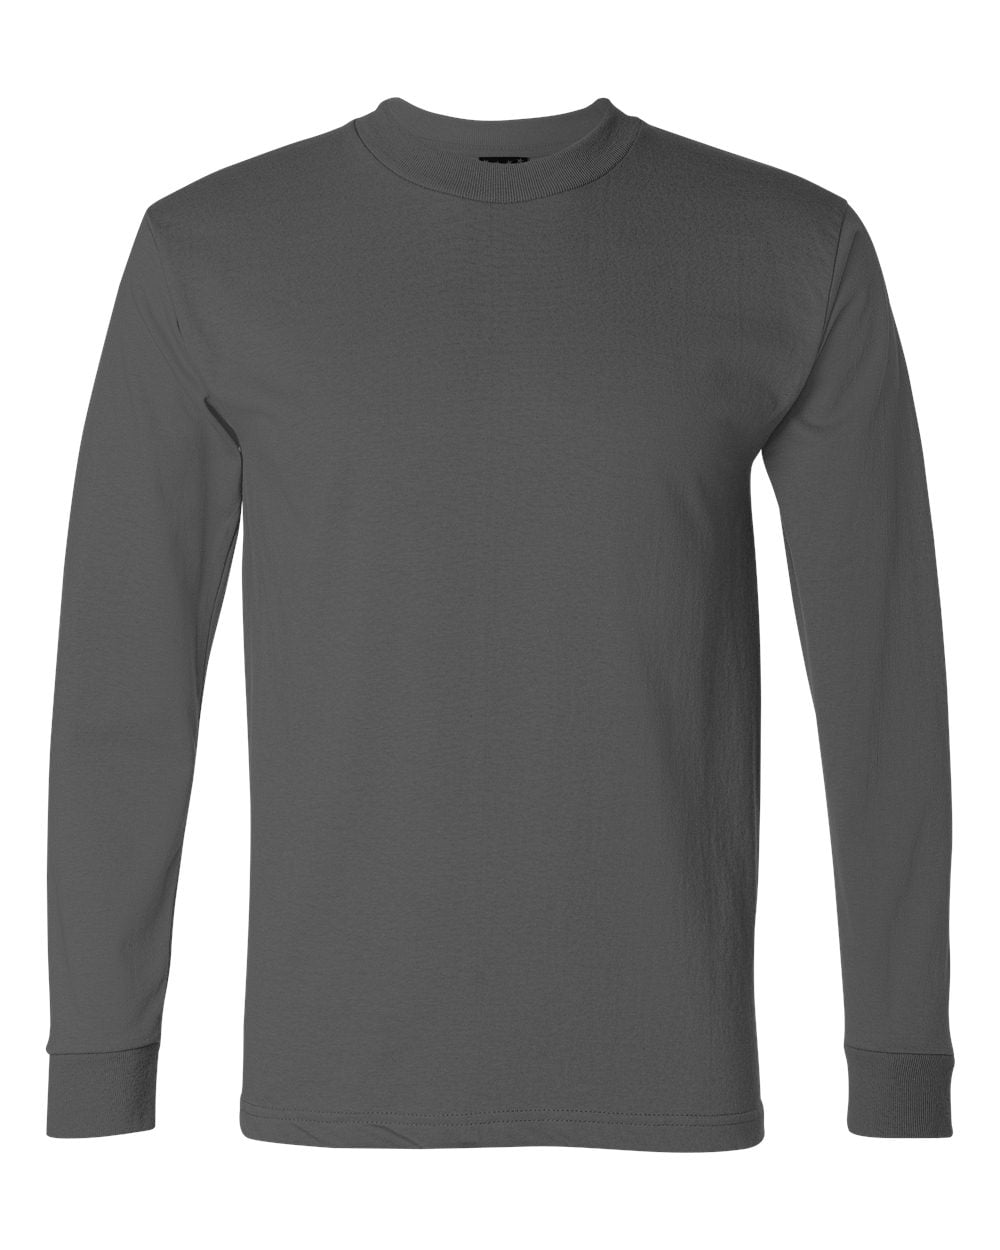 New - MMf - Bayside - Union-Made Long Sleeve T-Shirt - Walmart.com